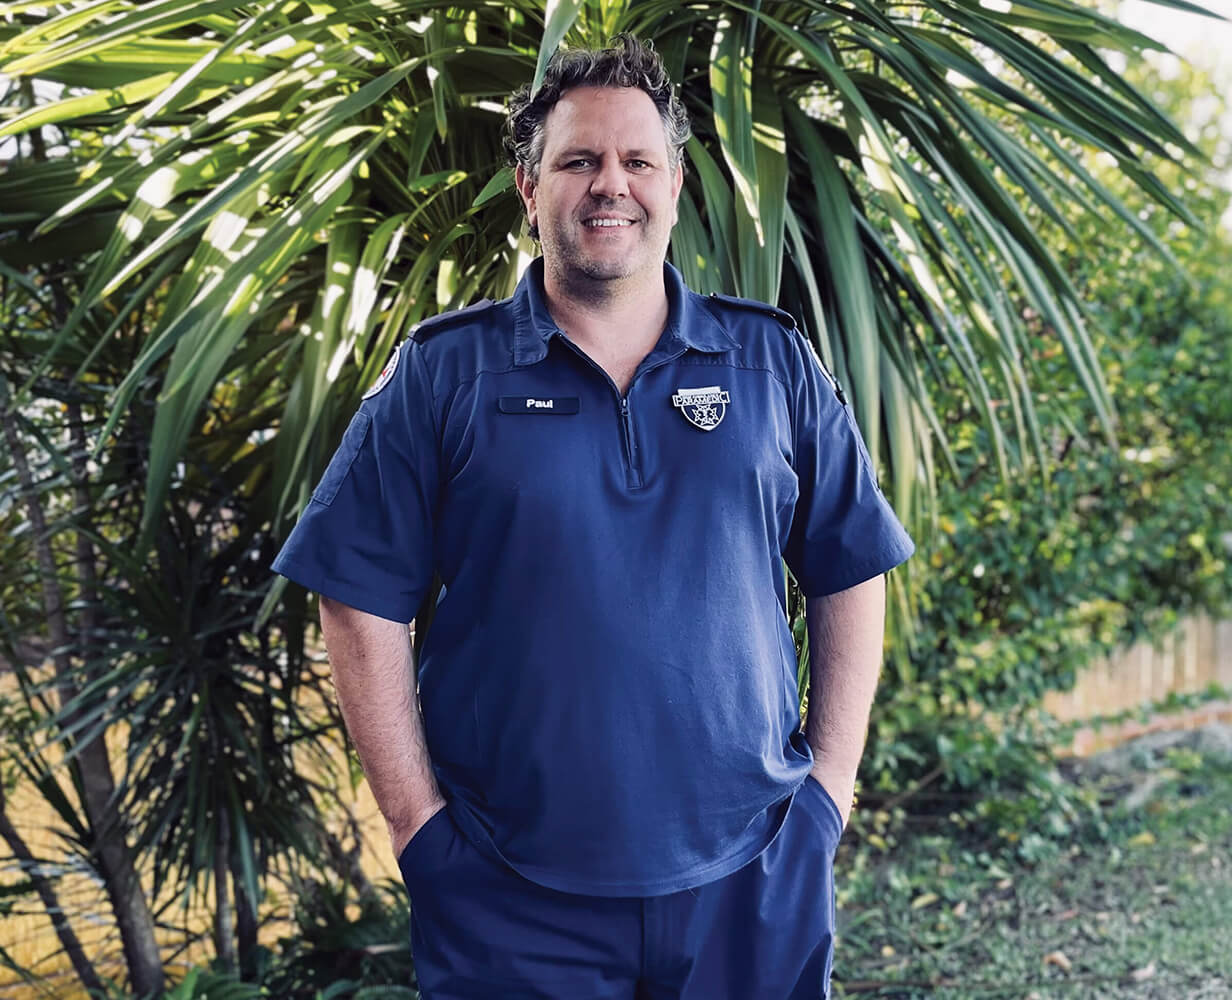 Paul Wilson – Local Nambucca Valley Paramedic